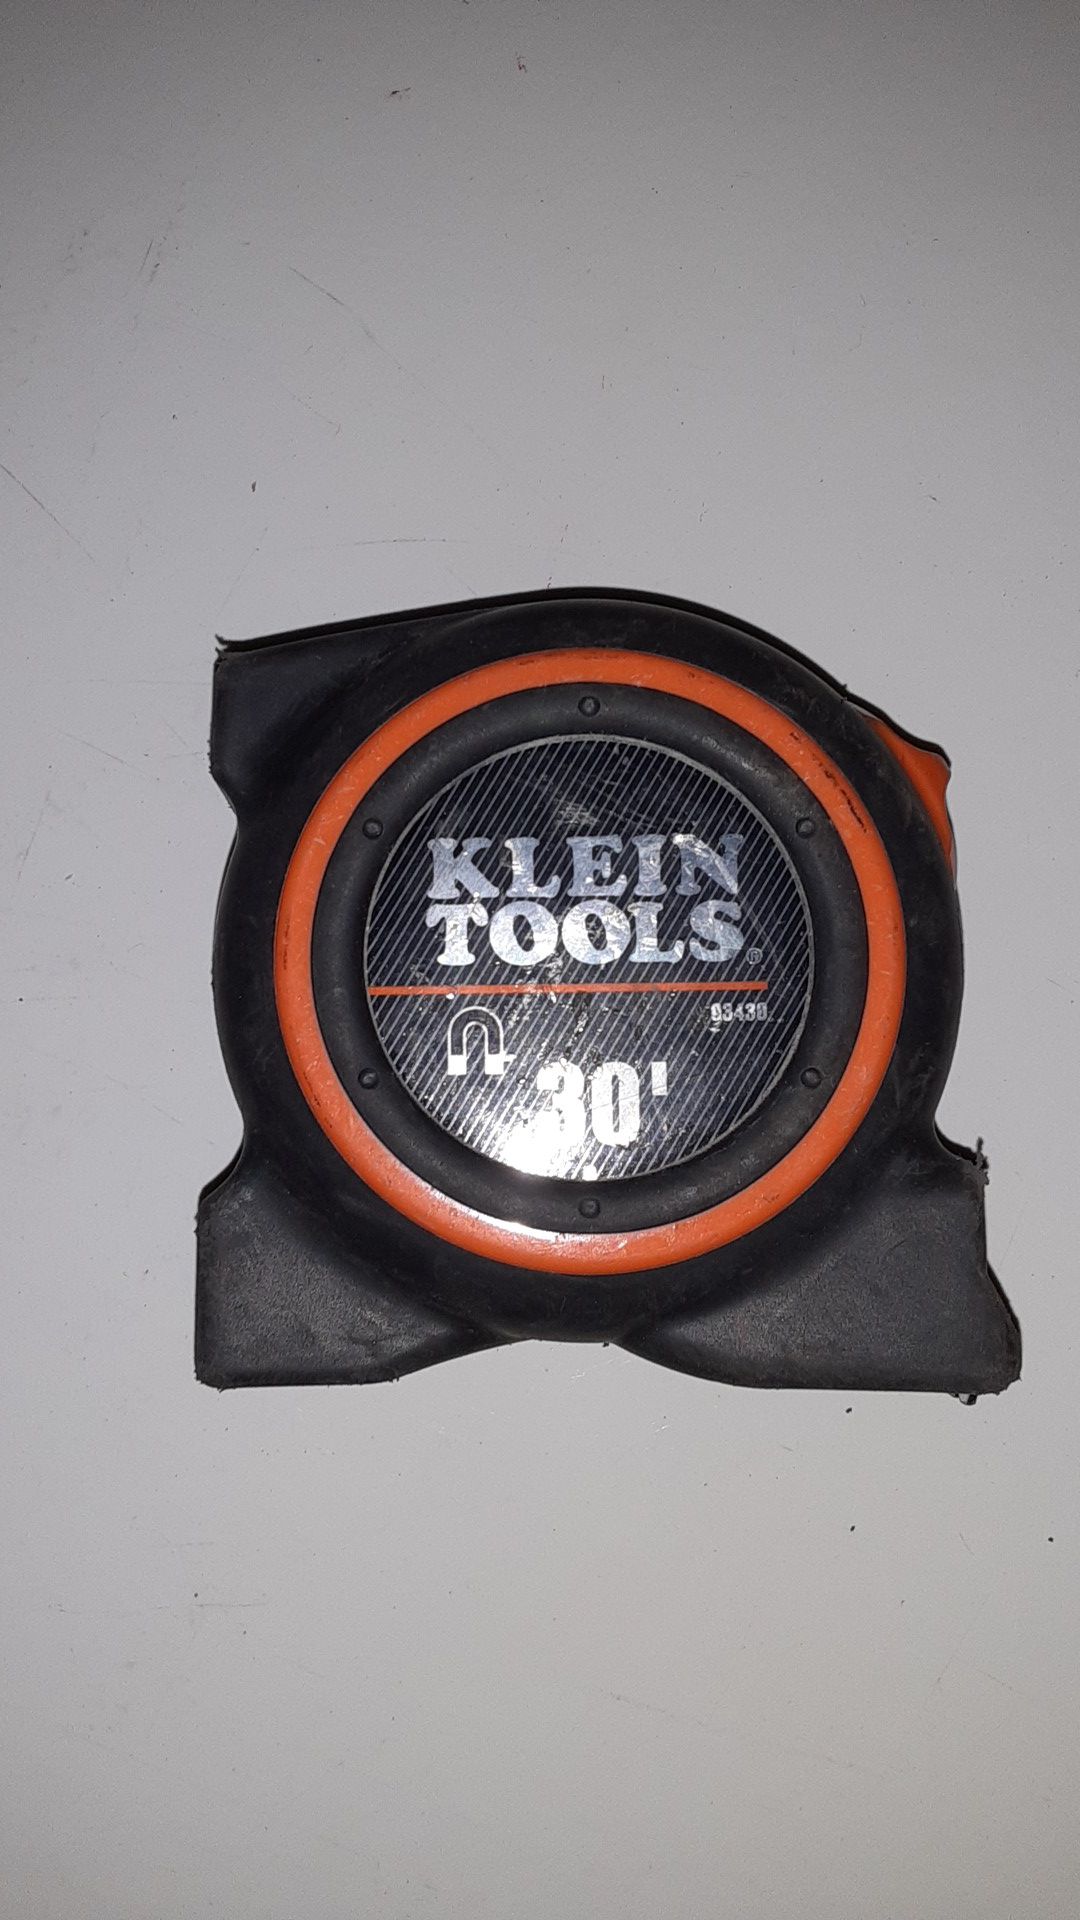 Klein tools tape measure 30'